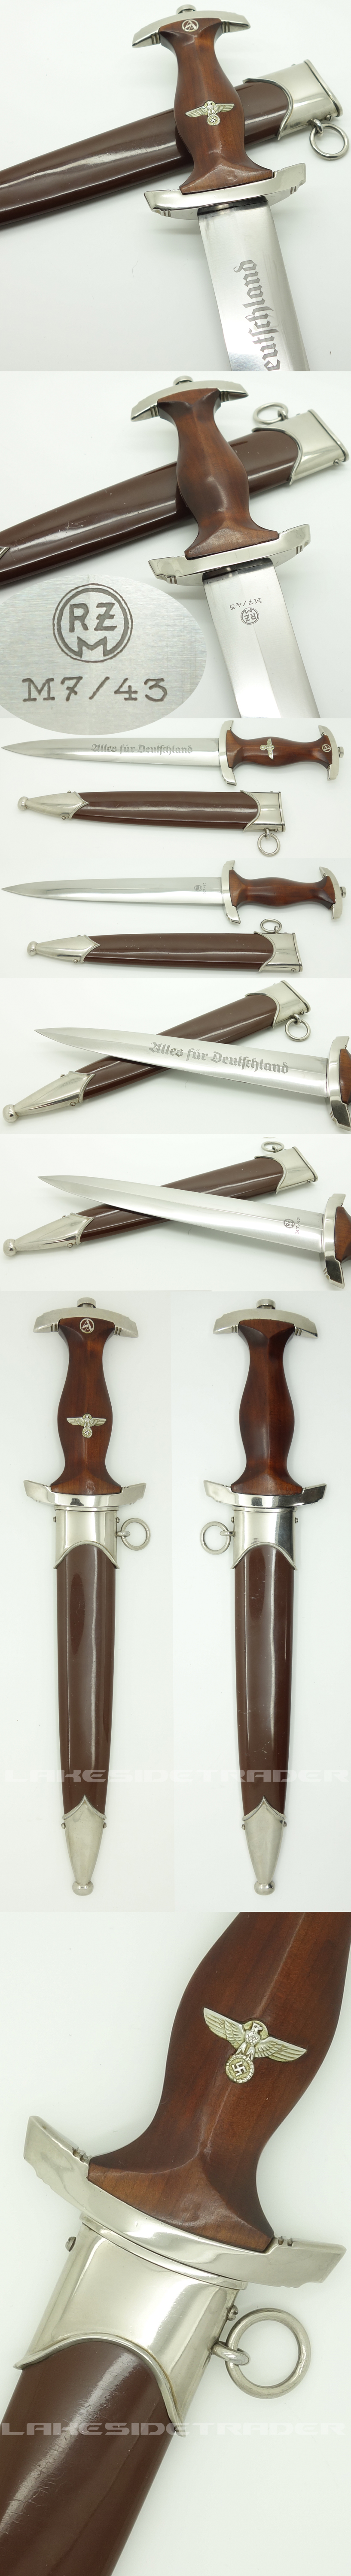 Minty - SA Dagger by RZM M7/43 Paul Weyersberg